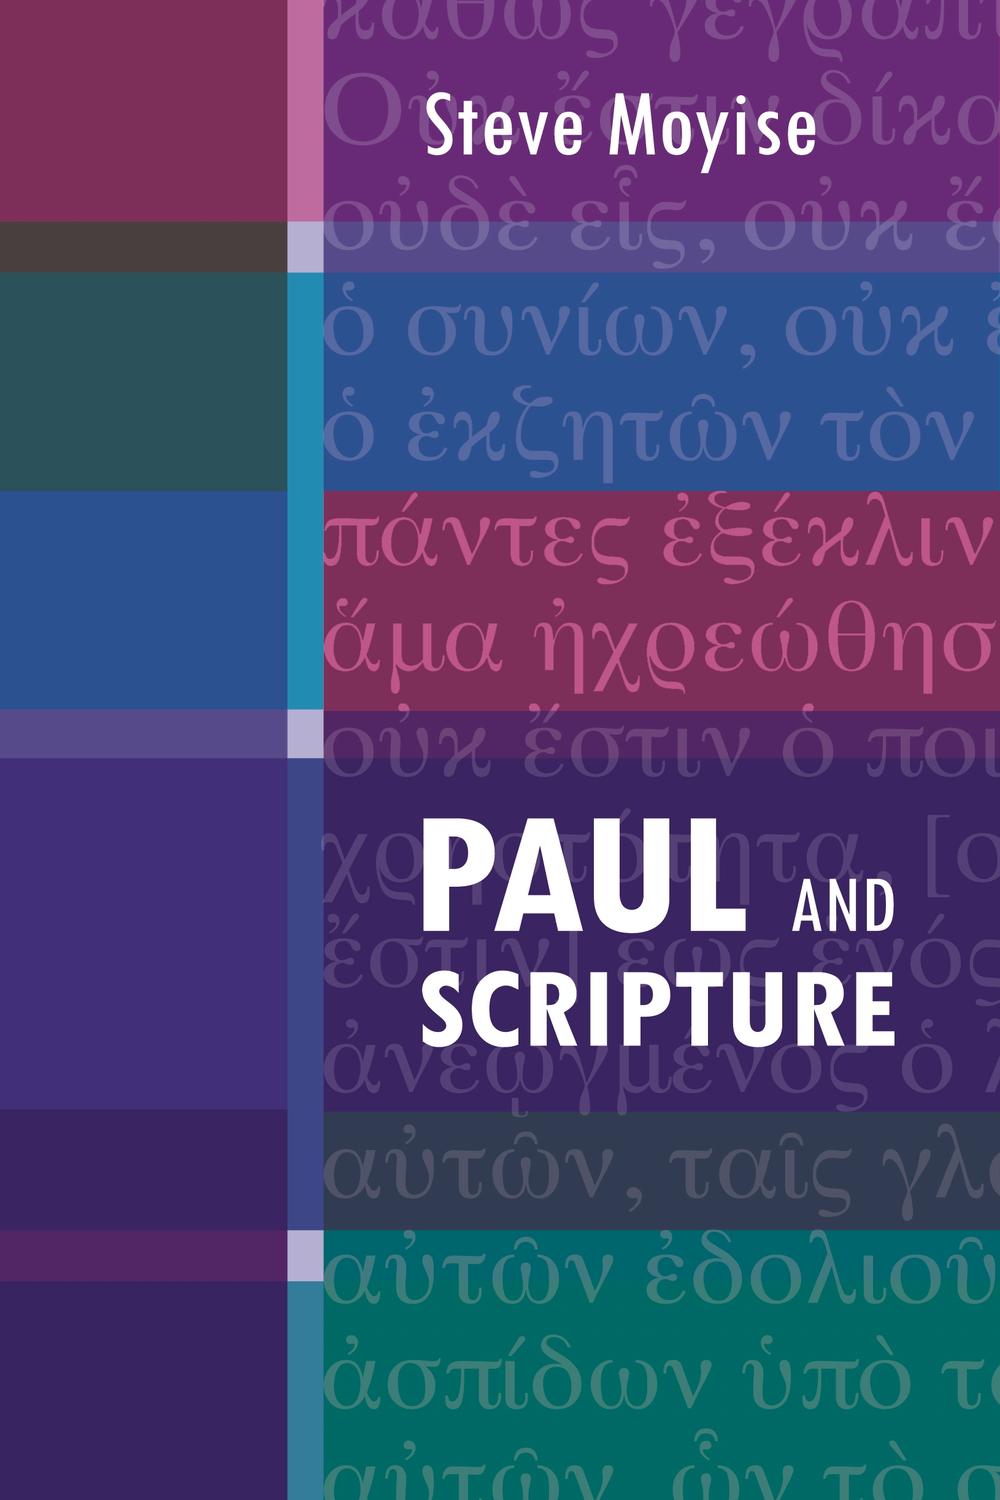 Paul and Scripture - Steve Moyise